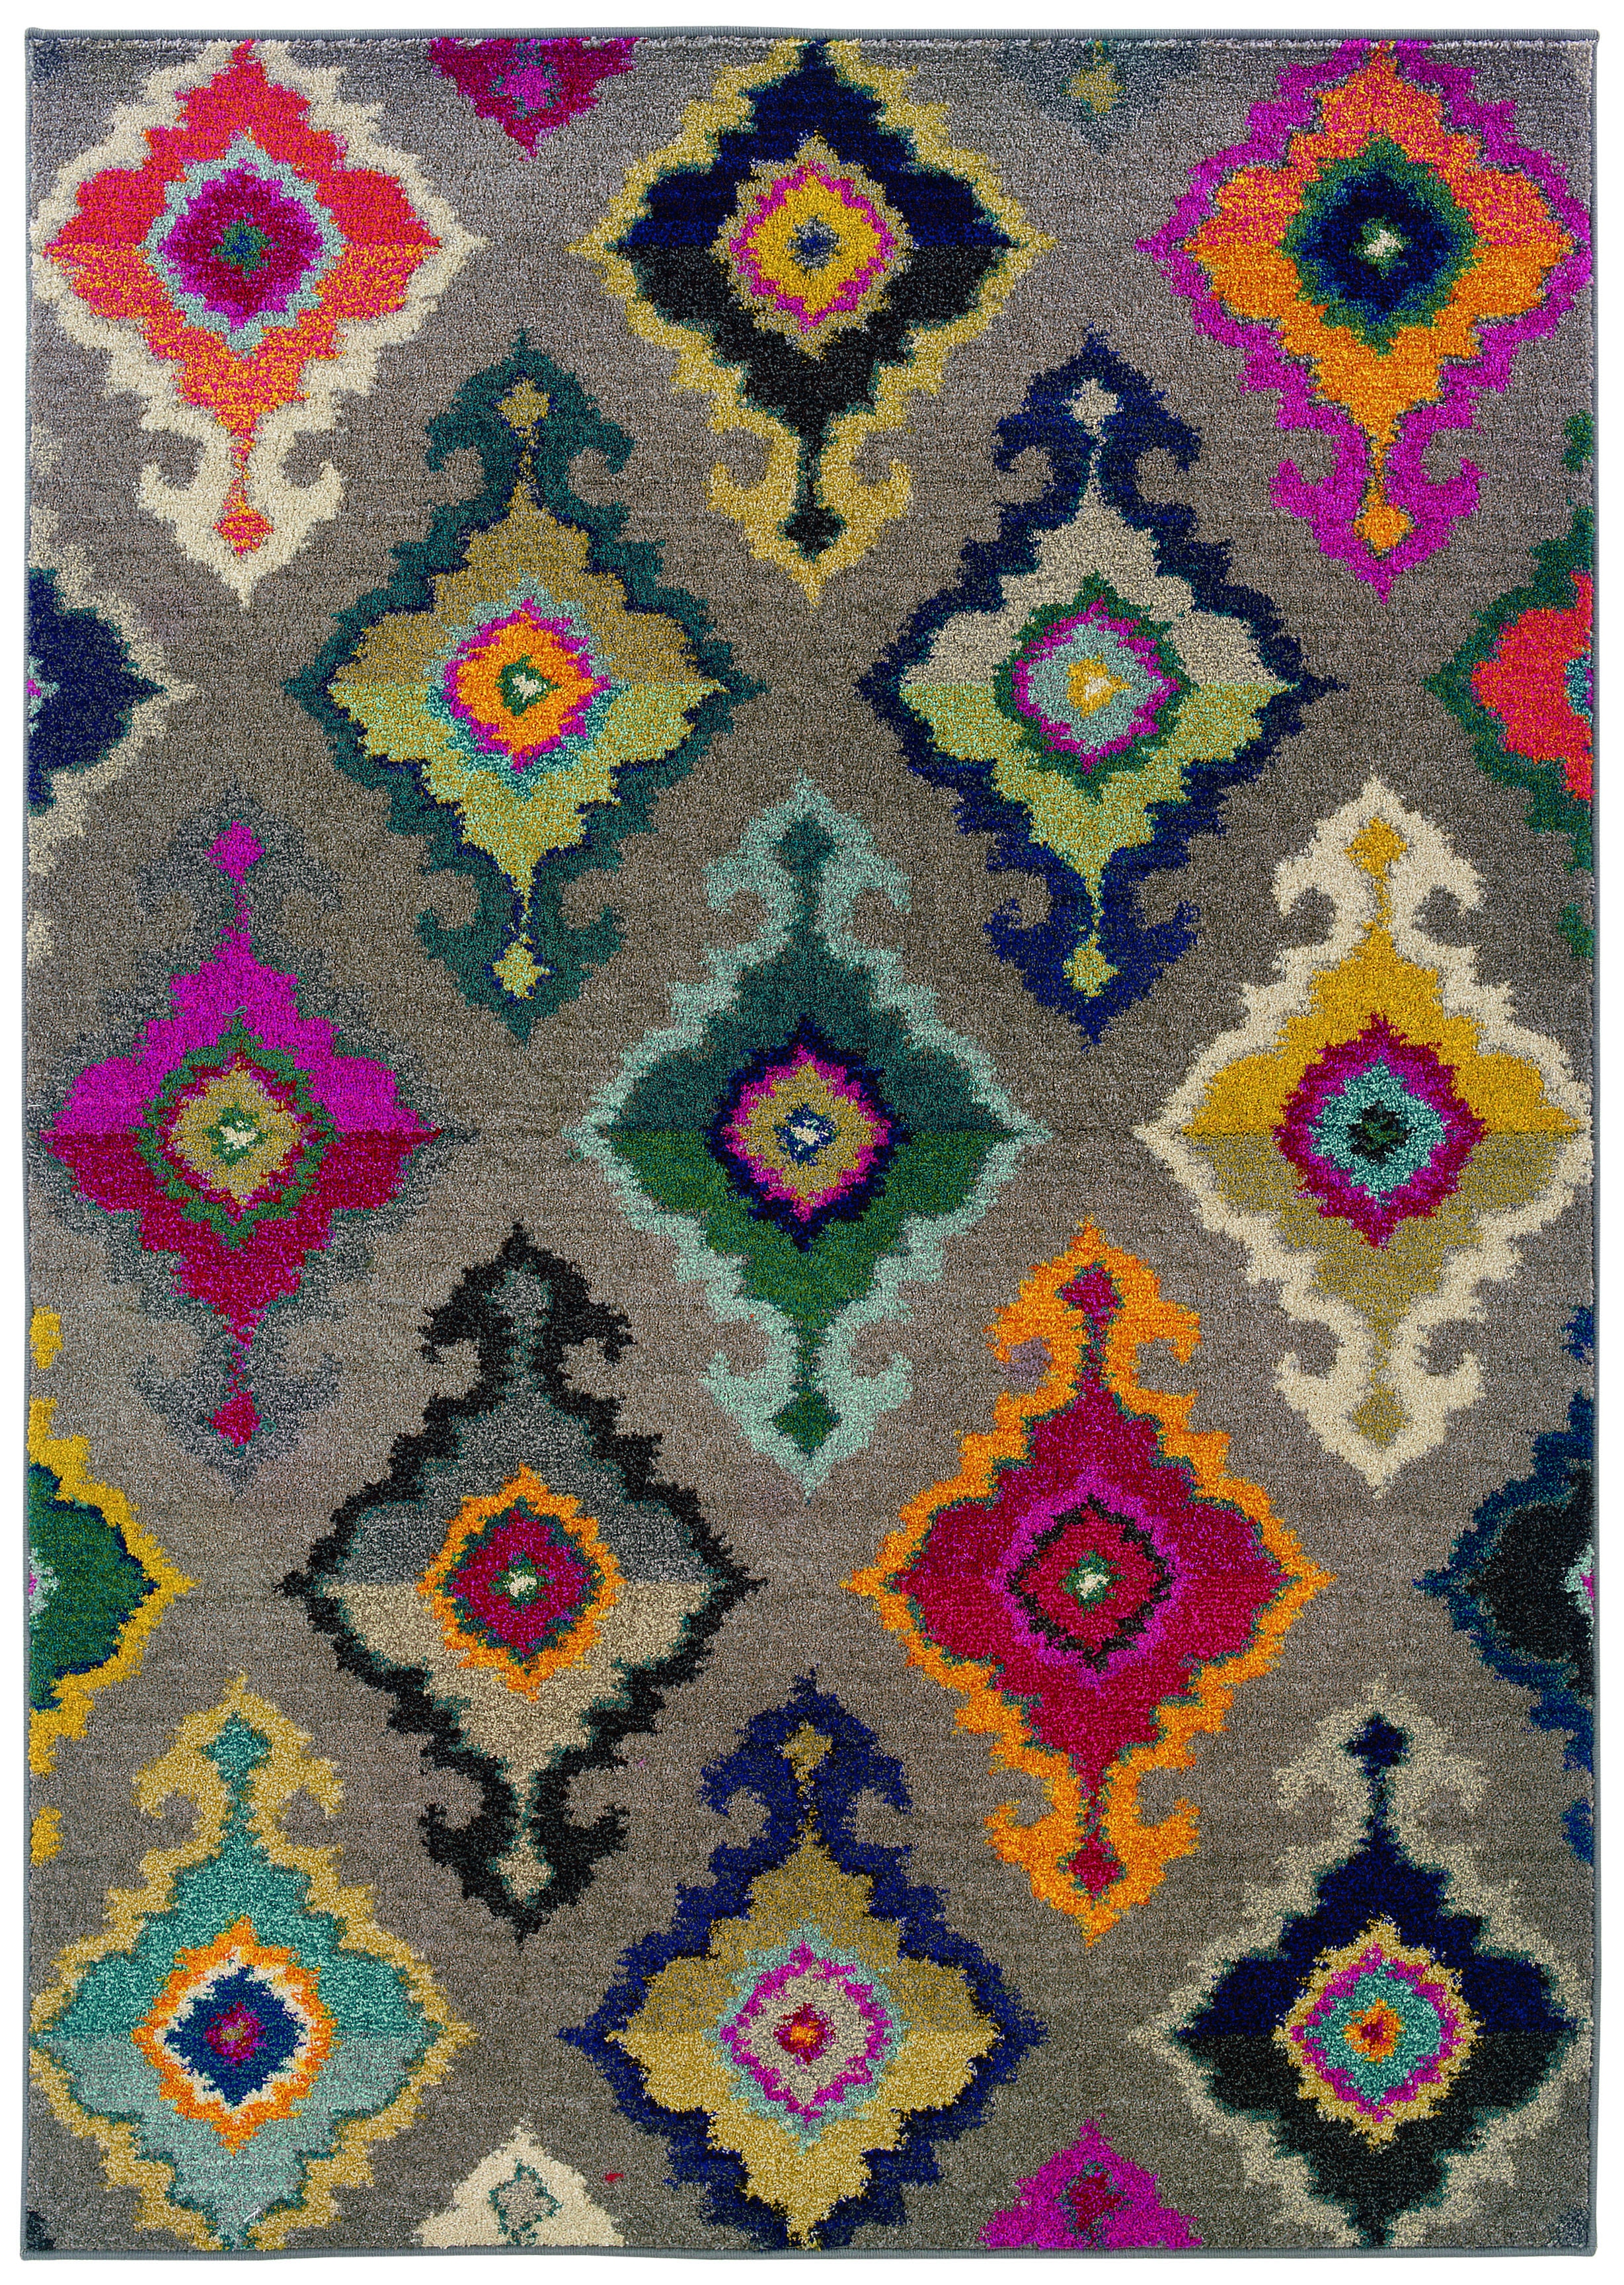 Multicolored area rugs